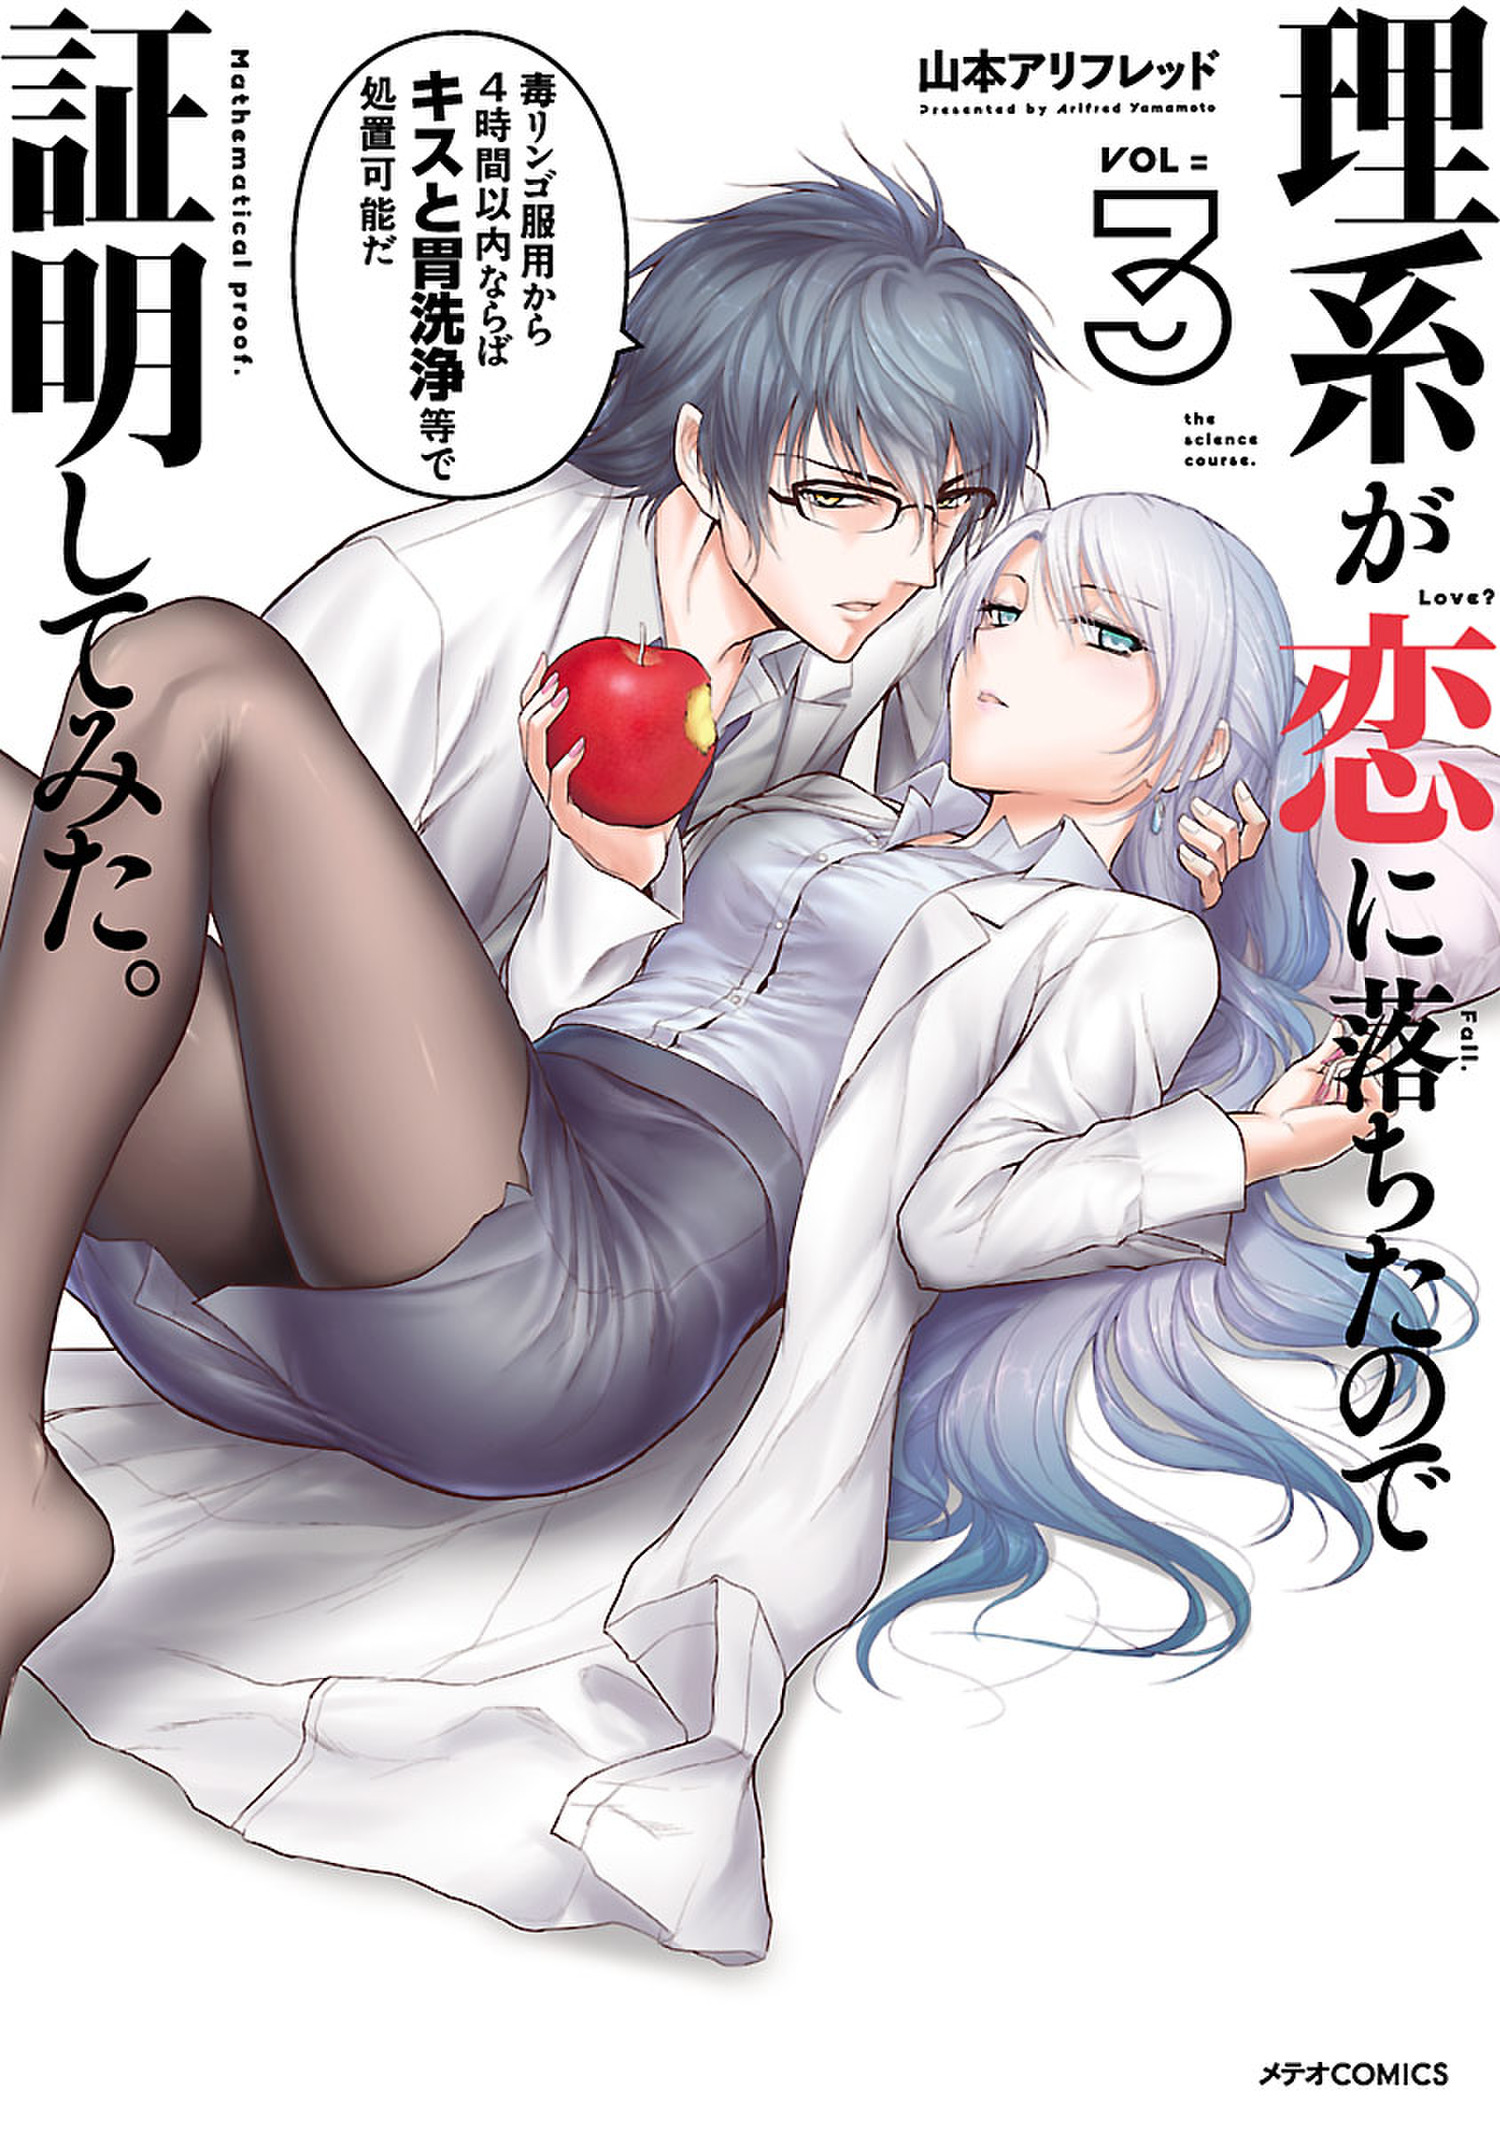 Manga Mogura RE on X: Rikei ga Koi ni Ochita no de Shoumei shitemita  (Science Has Fallen in Love, so We Tried to Prove It) vol 11 by Yamamoto  Alfred  /